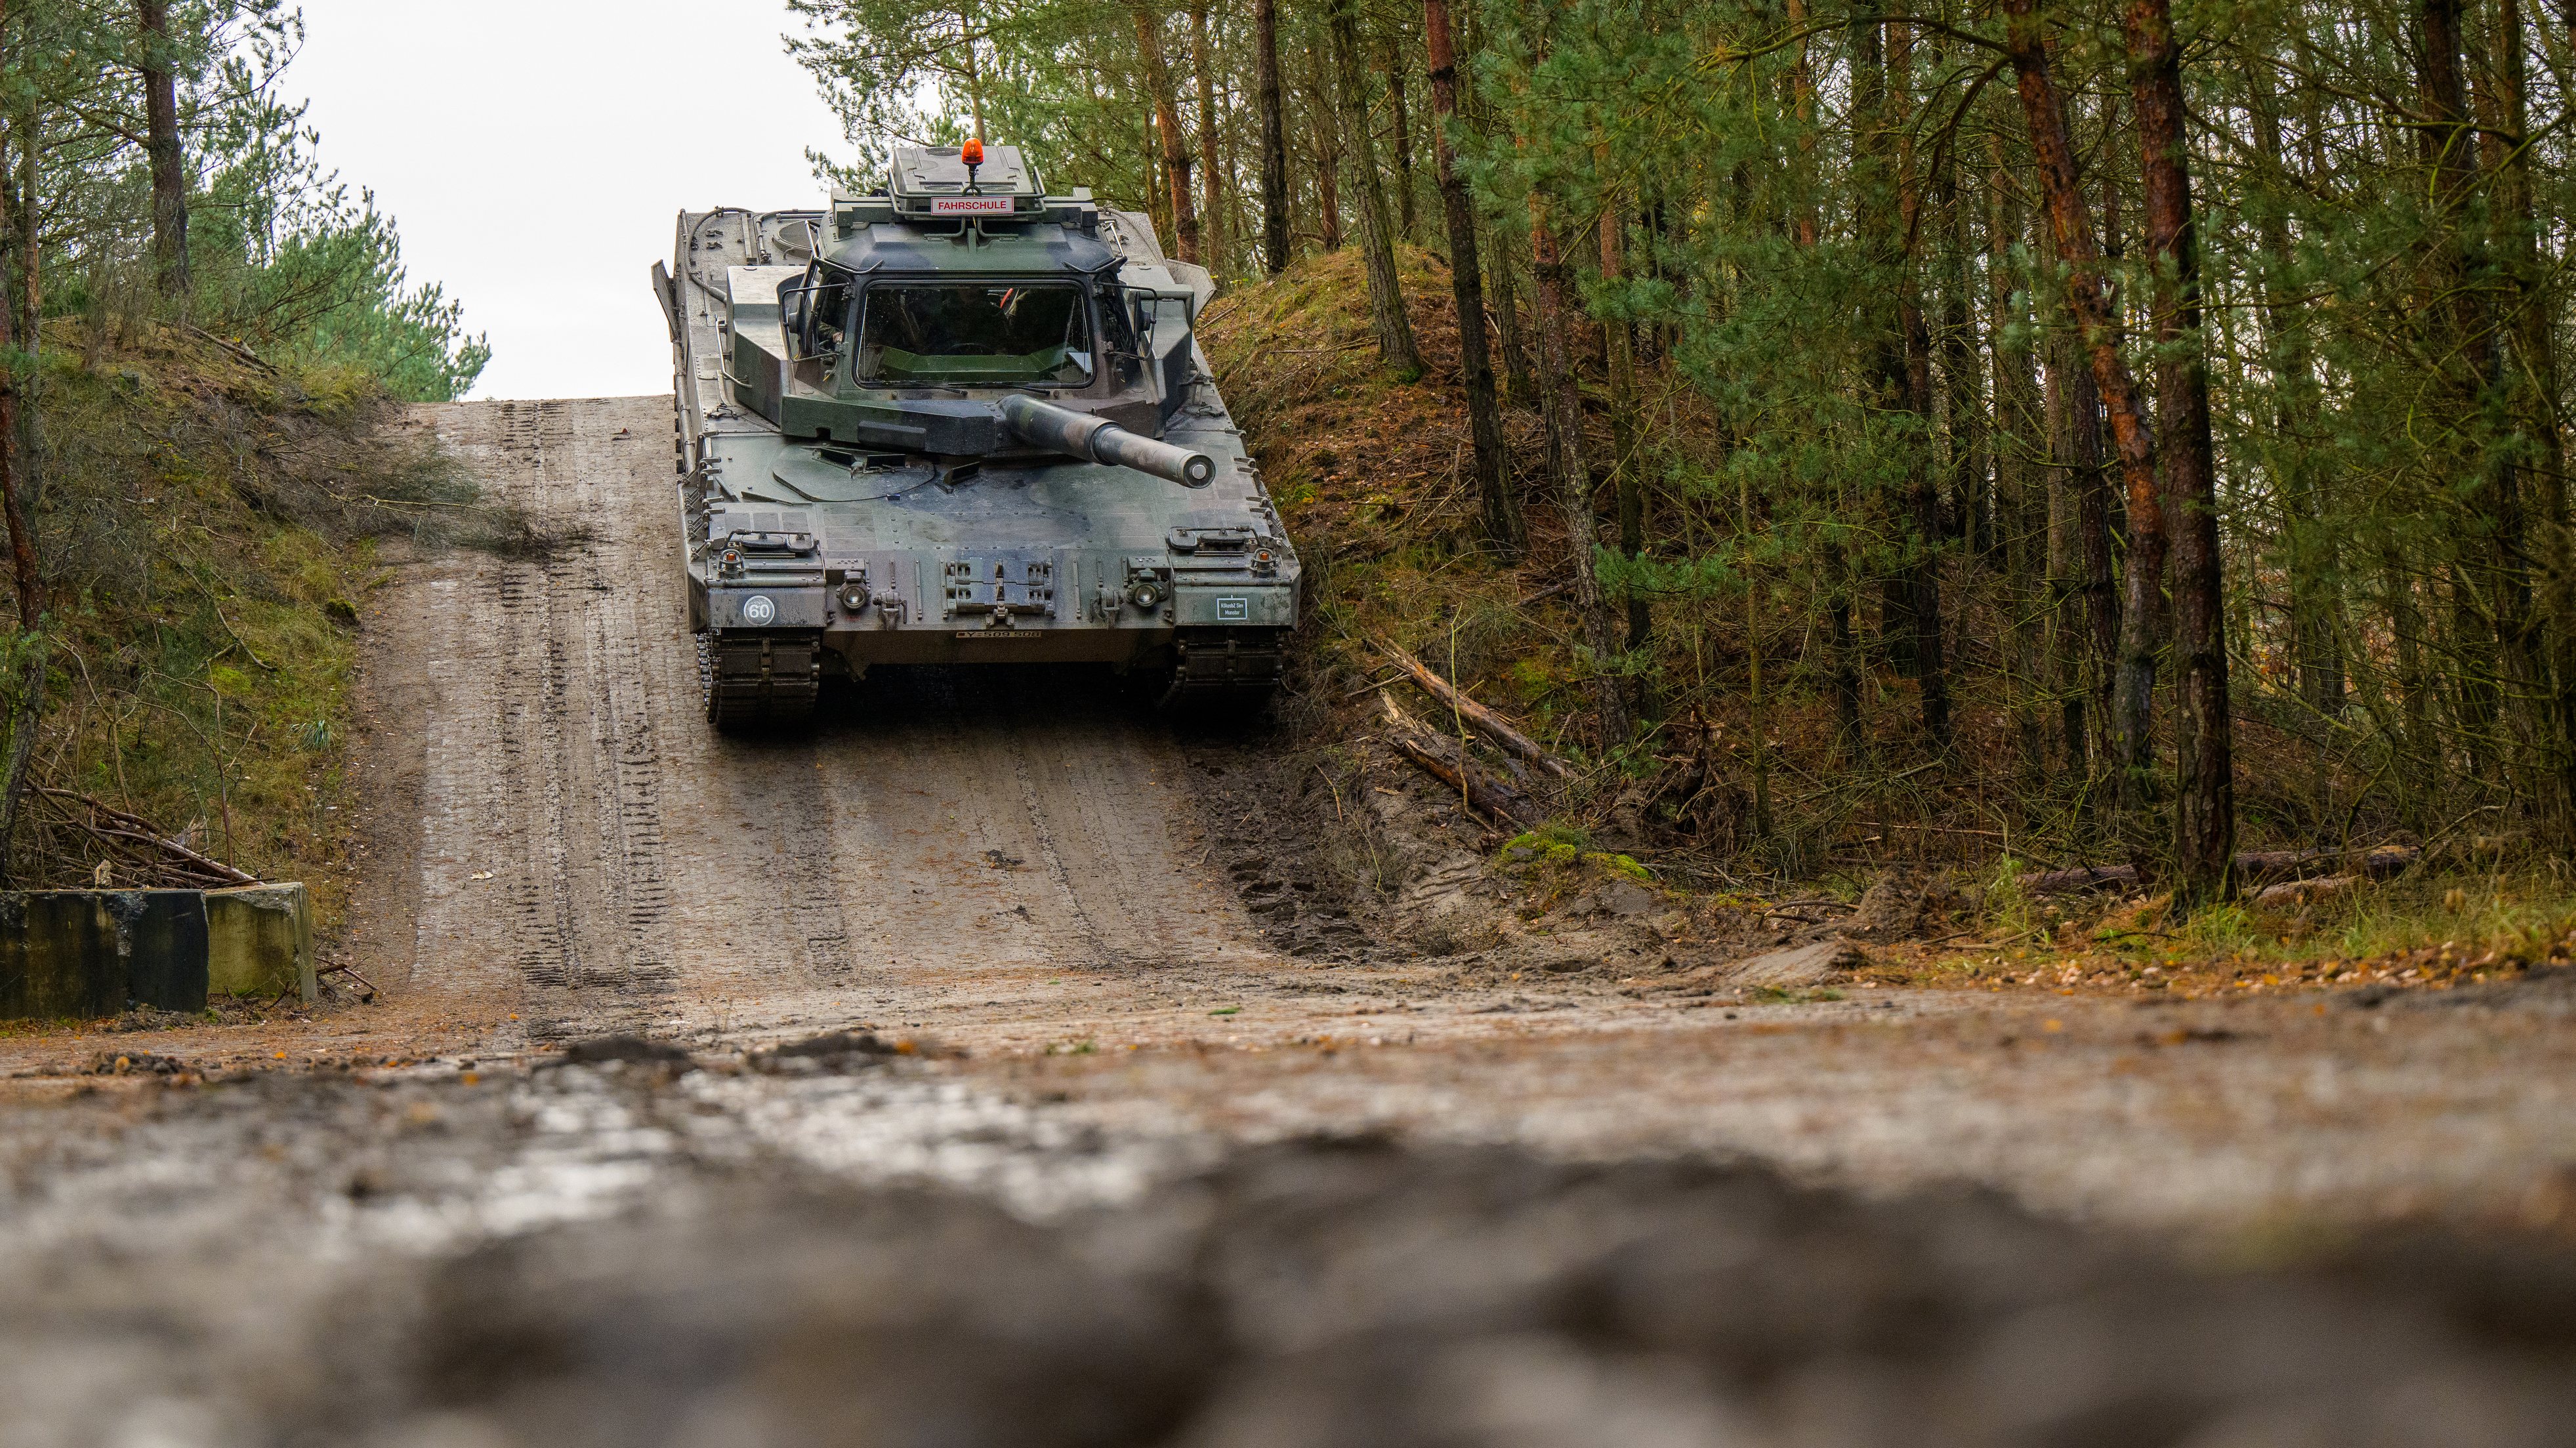 Tank driving training of Slovak servicemen and women